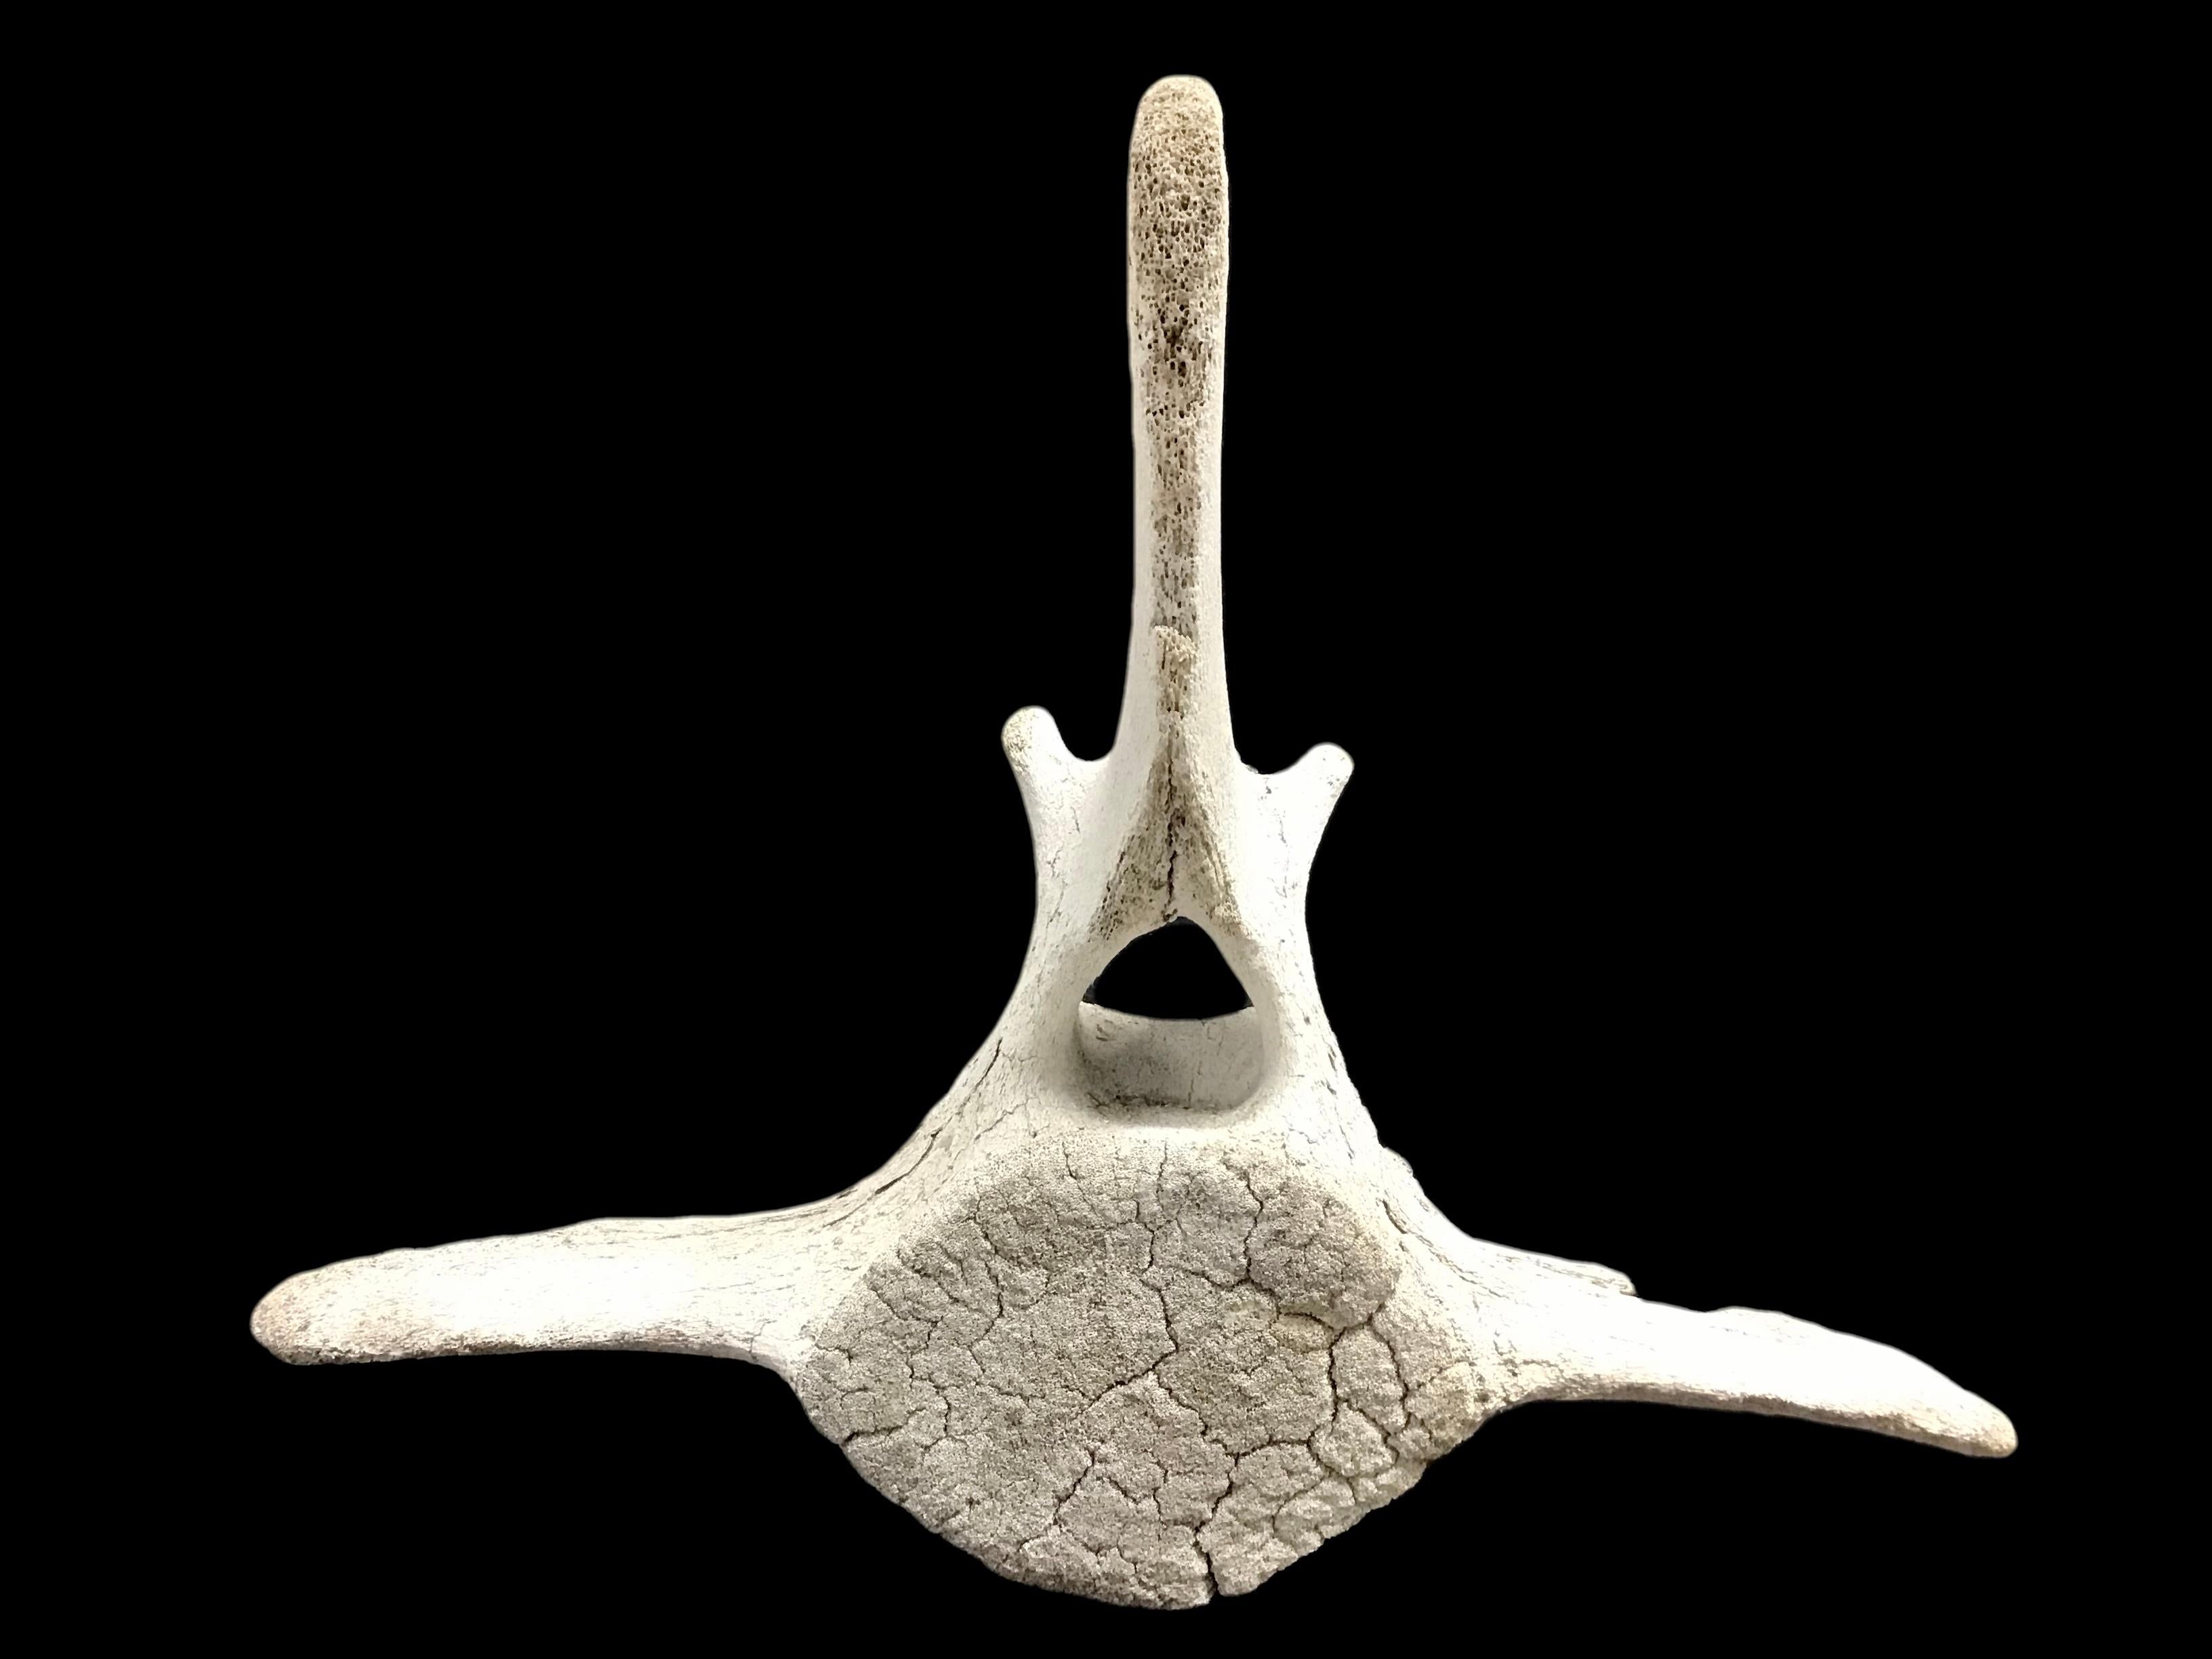 Large Fossilized Whale Vertebra Bone #3 2